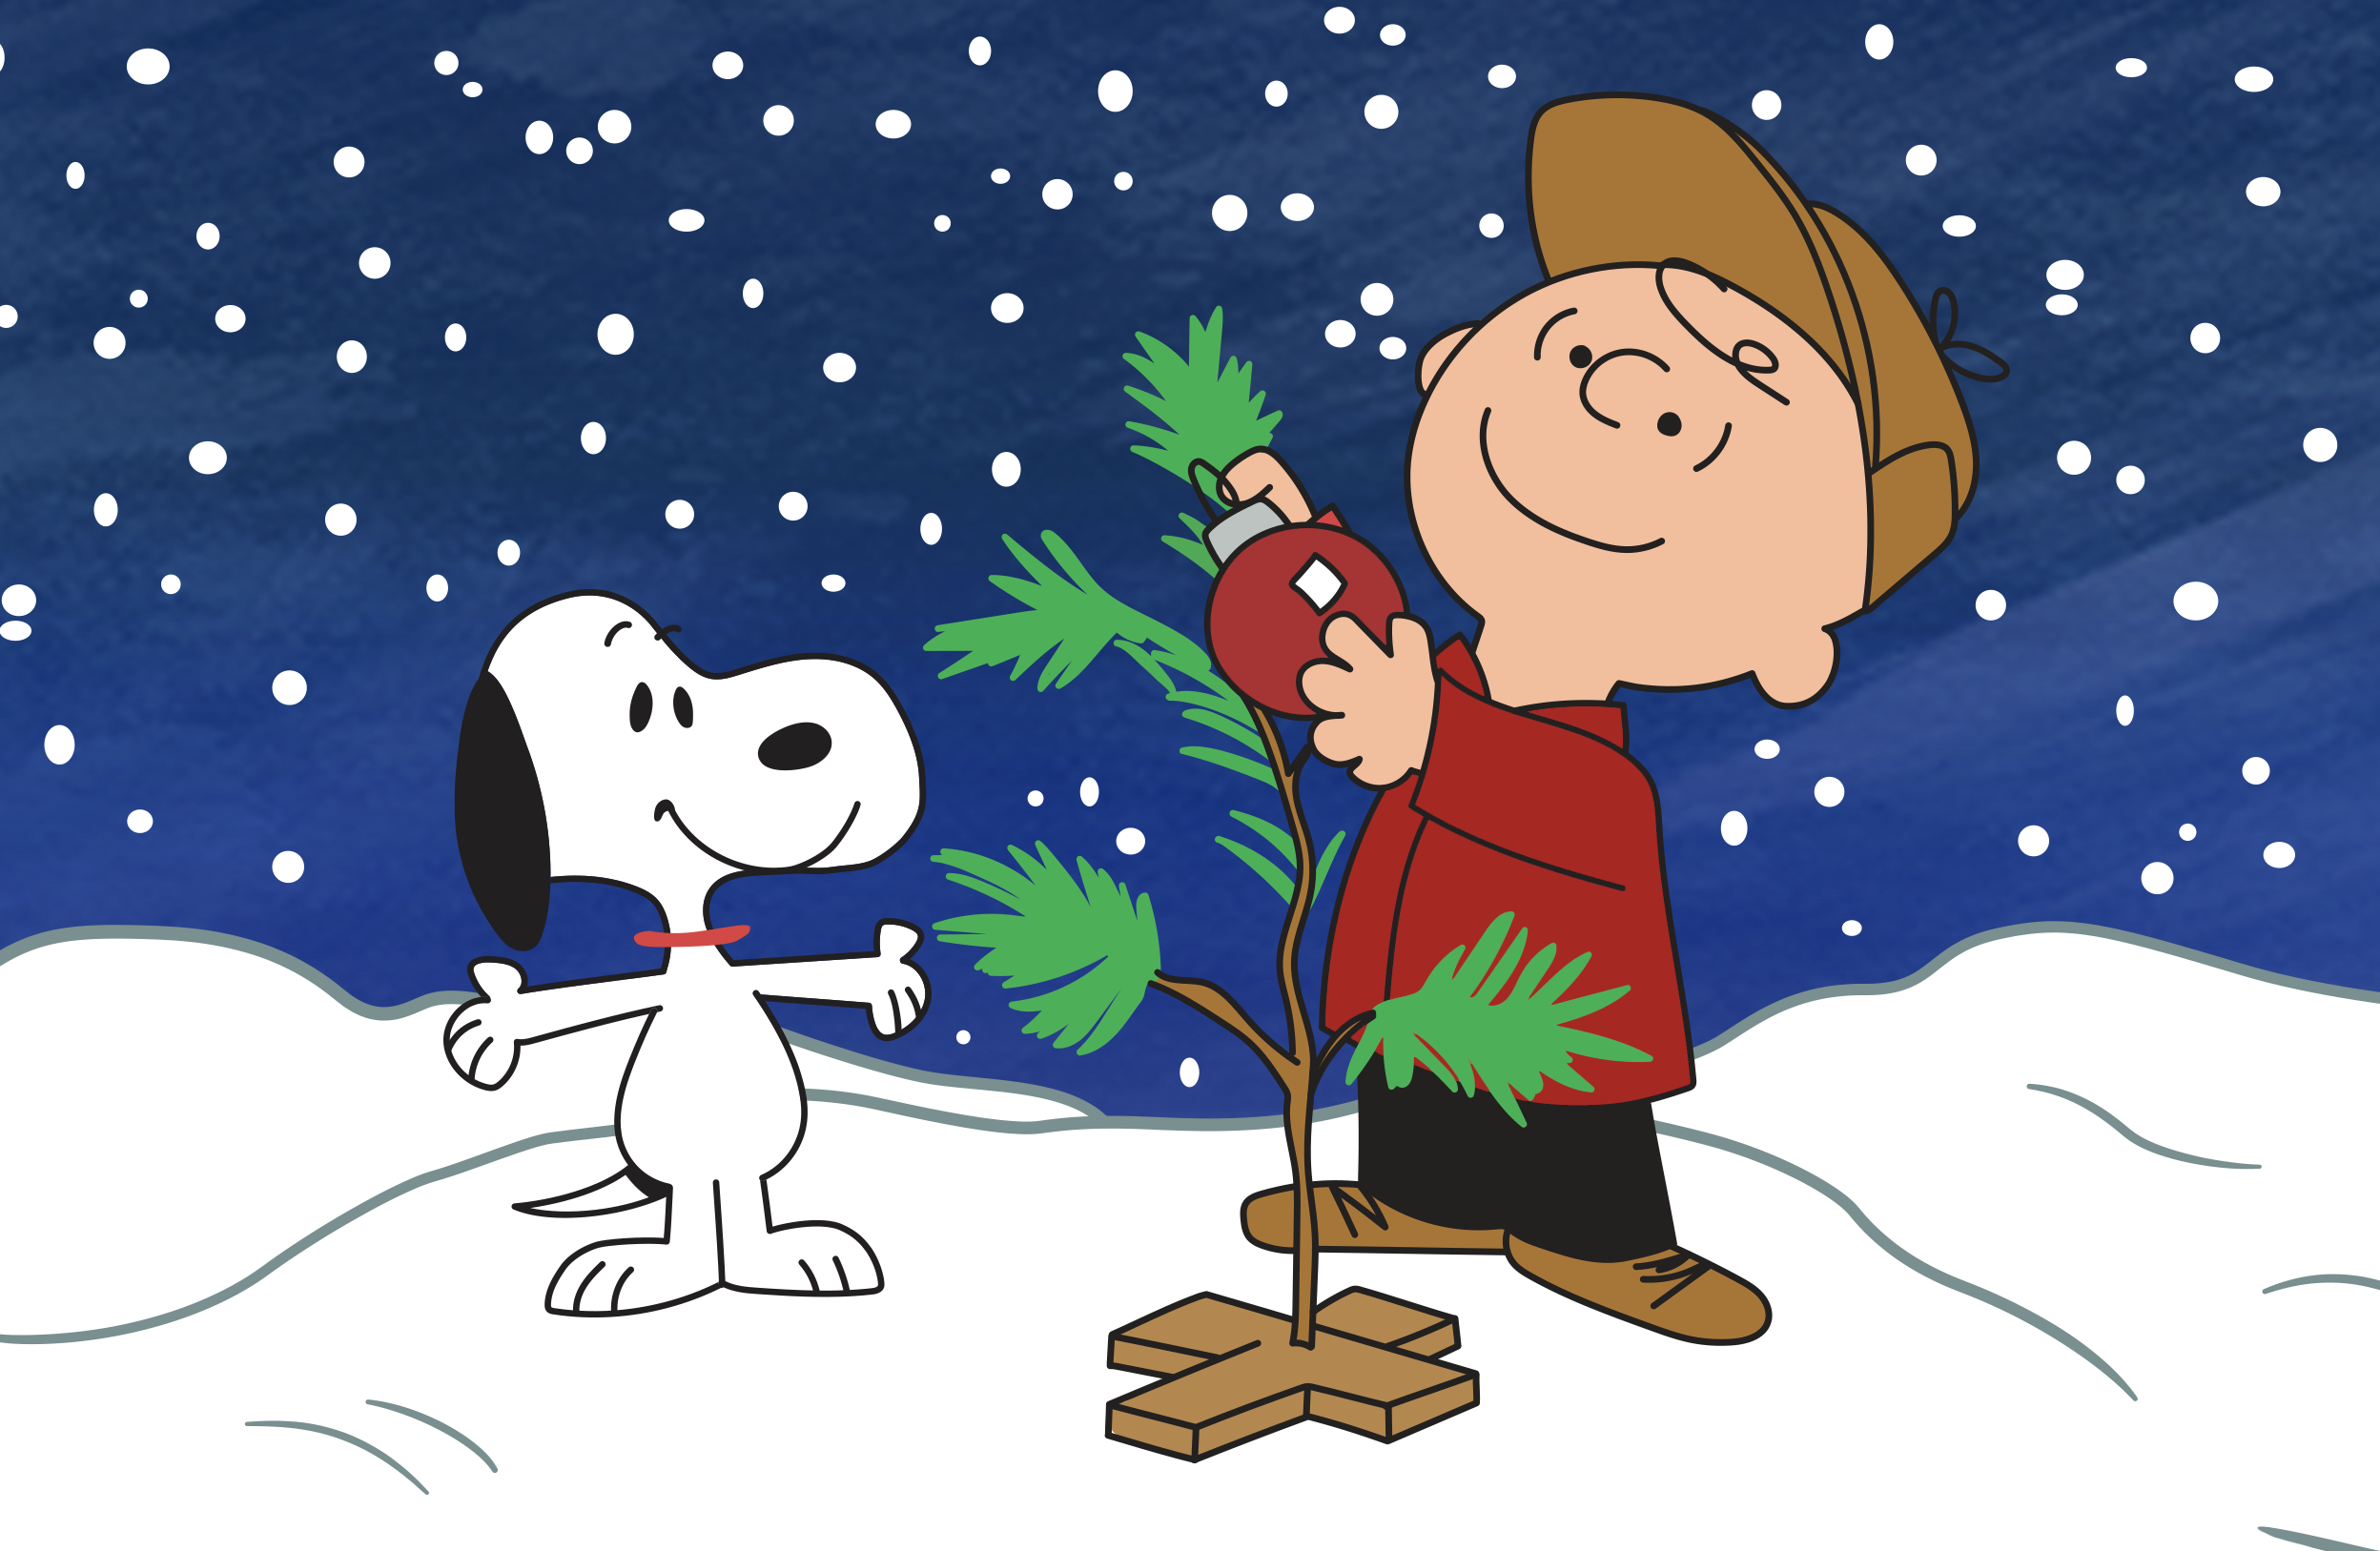 A "LMU" Mystery for a Charlie Brown Christmas